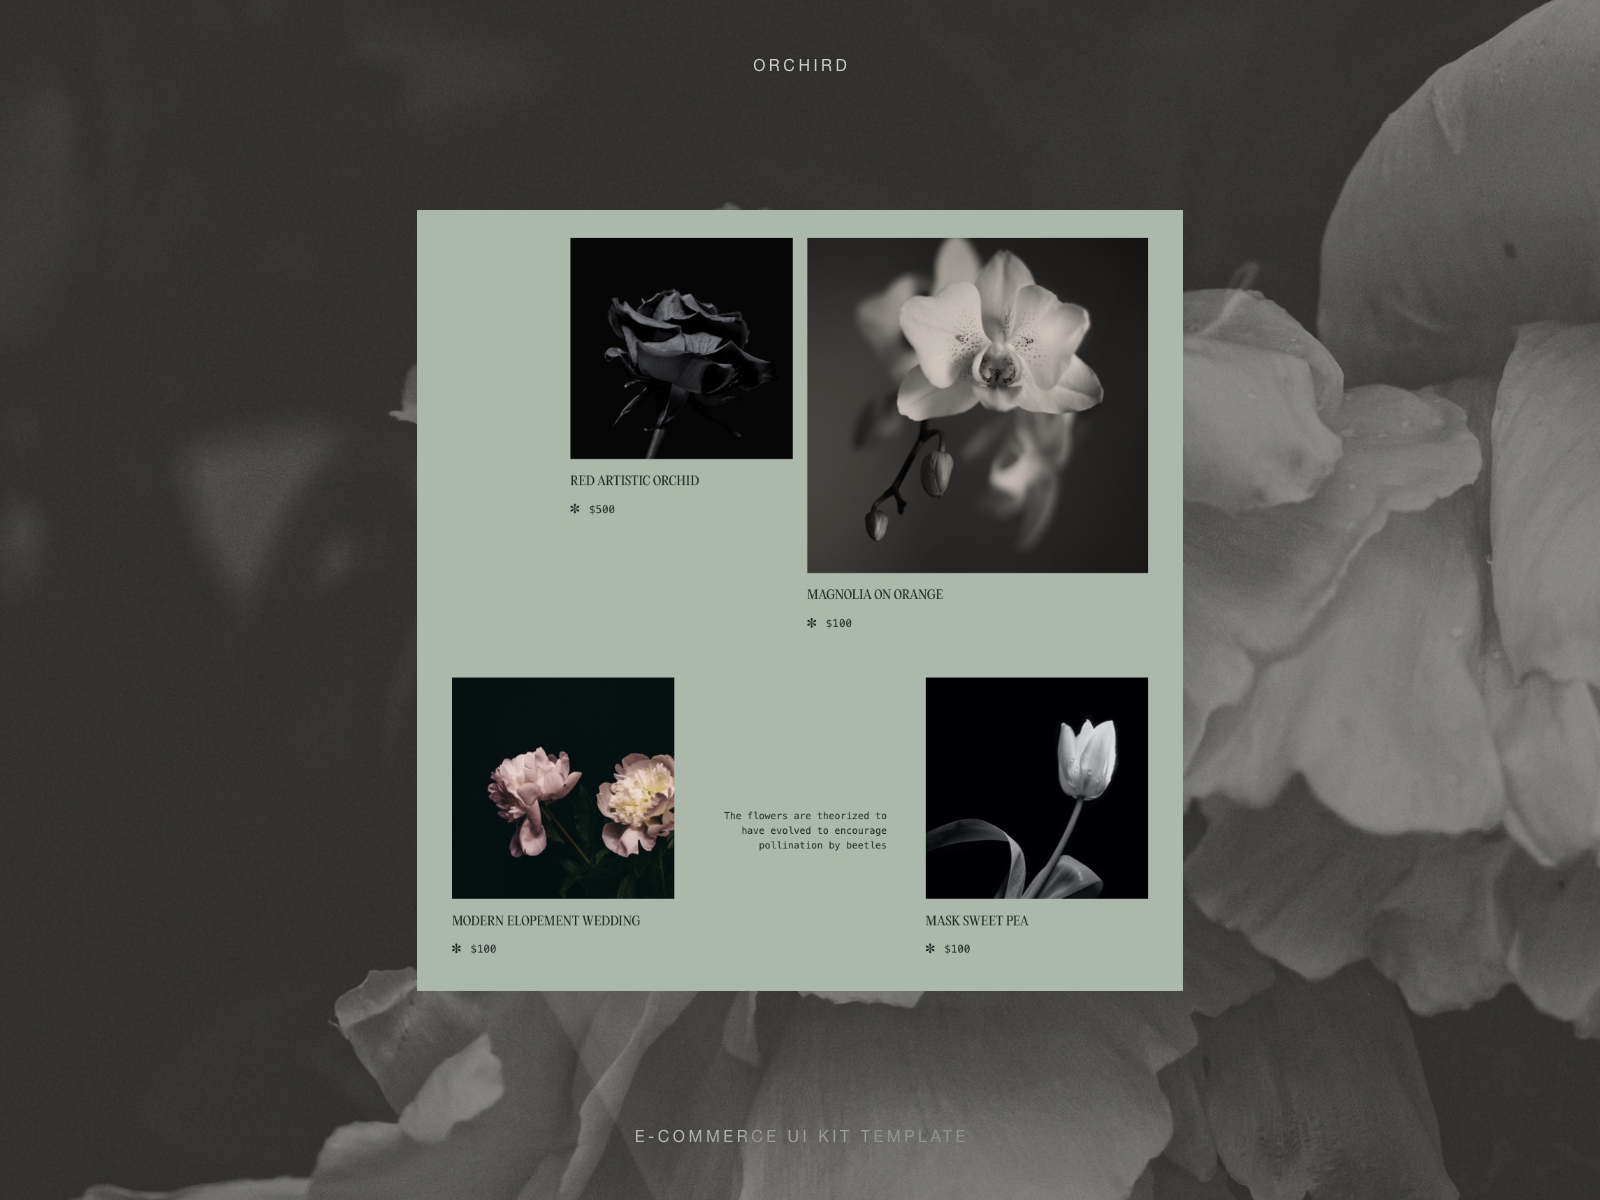 Orchid | E-commerce UI KIT Template